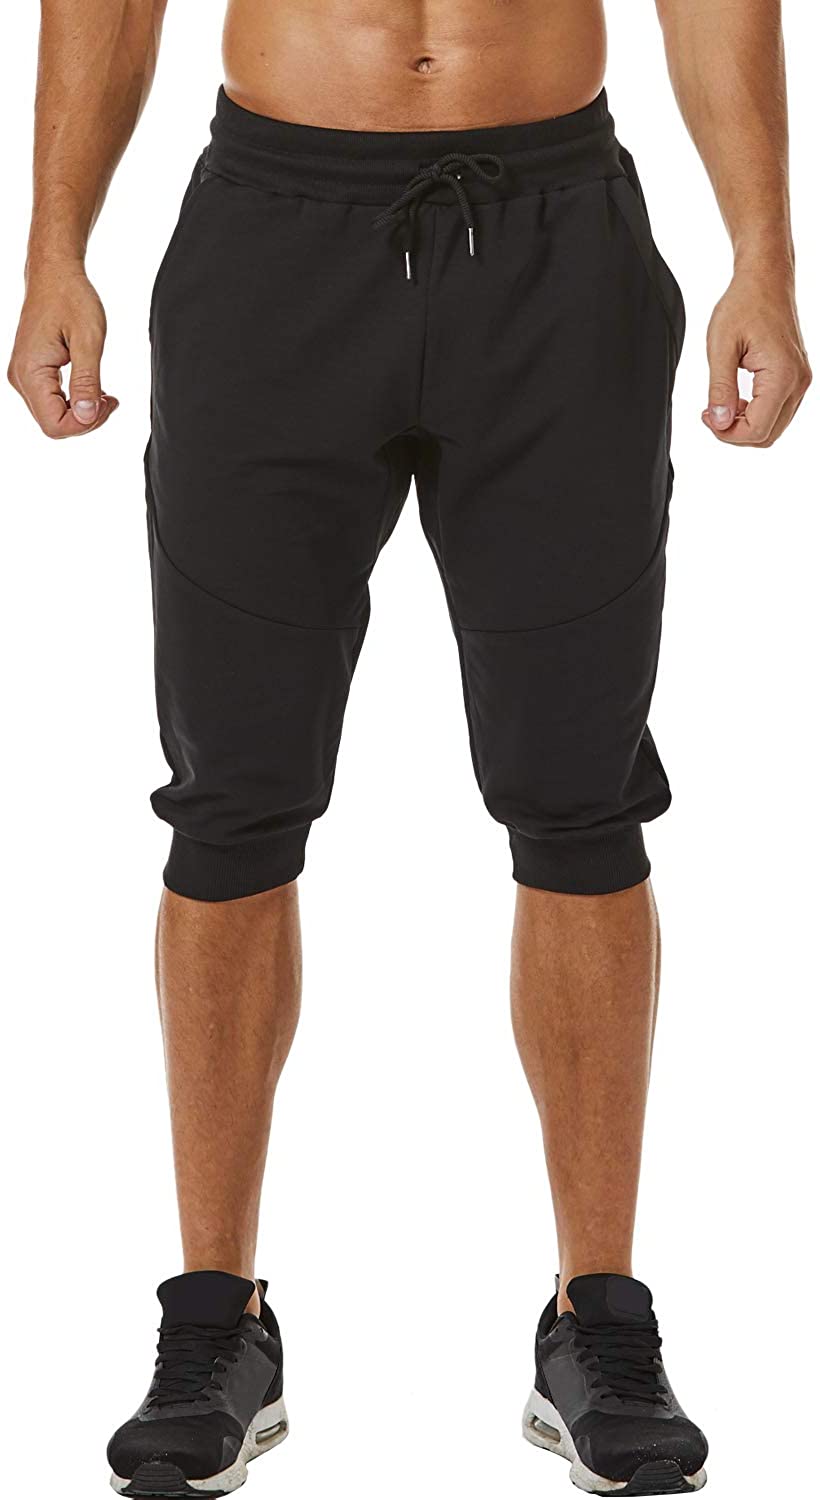 Black 3 4 jogger pants